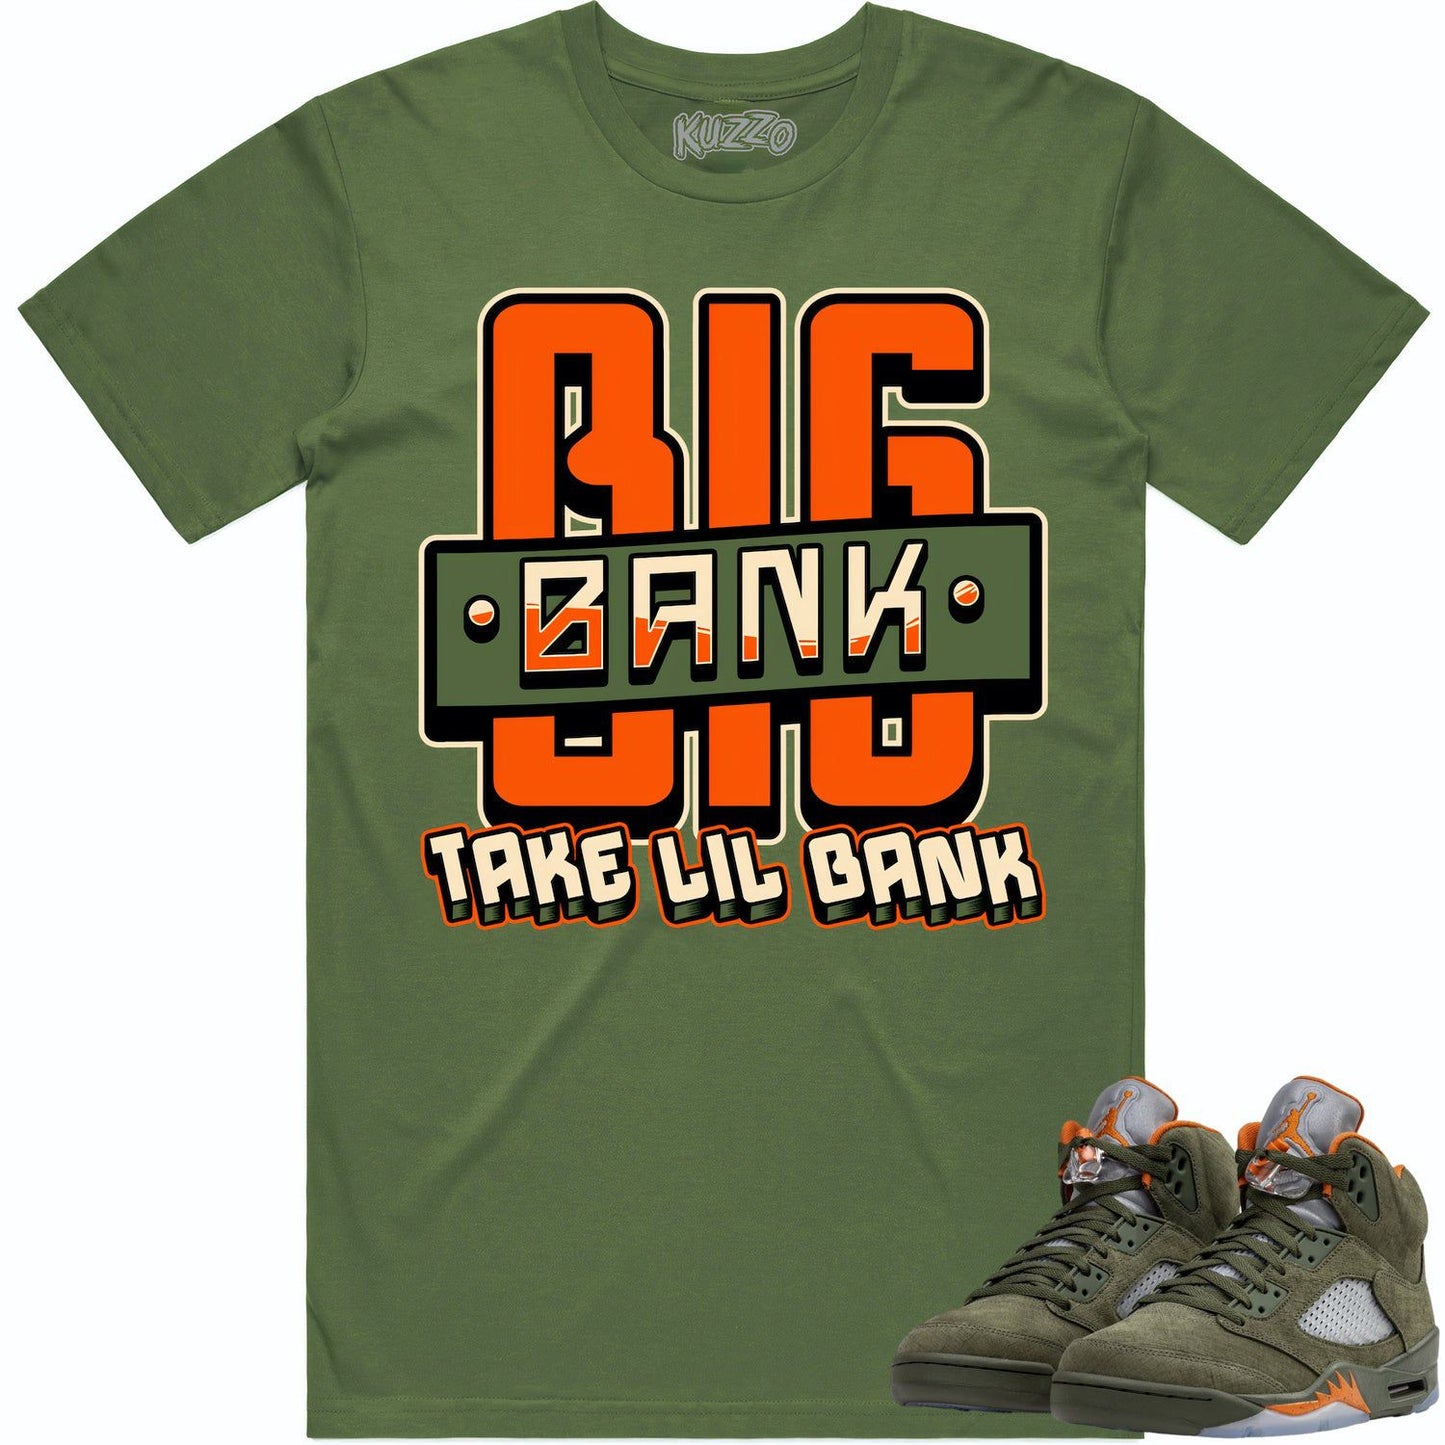 Olive 5s Shirts - Jordan Retro 5 Olive Sneaker Tees - Celadon Big Bank